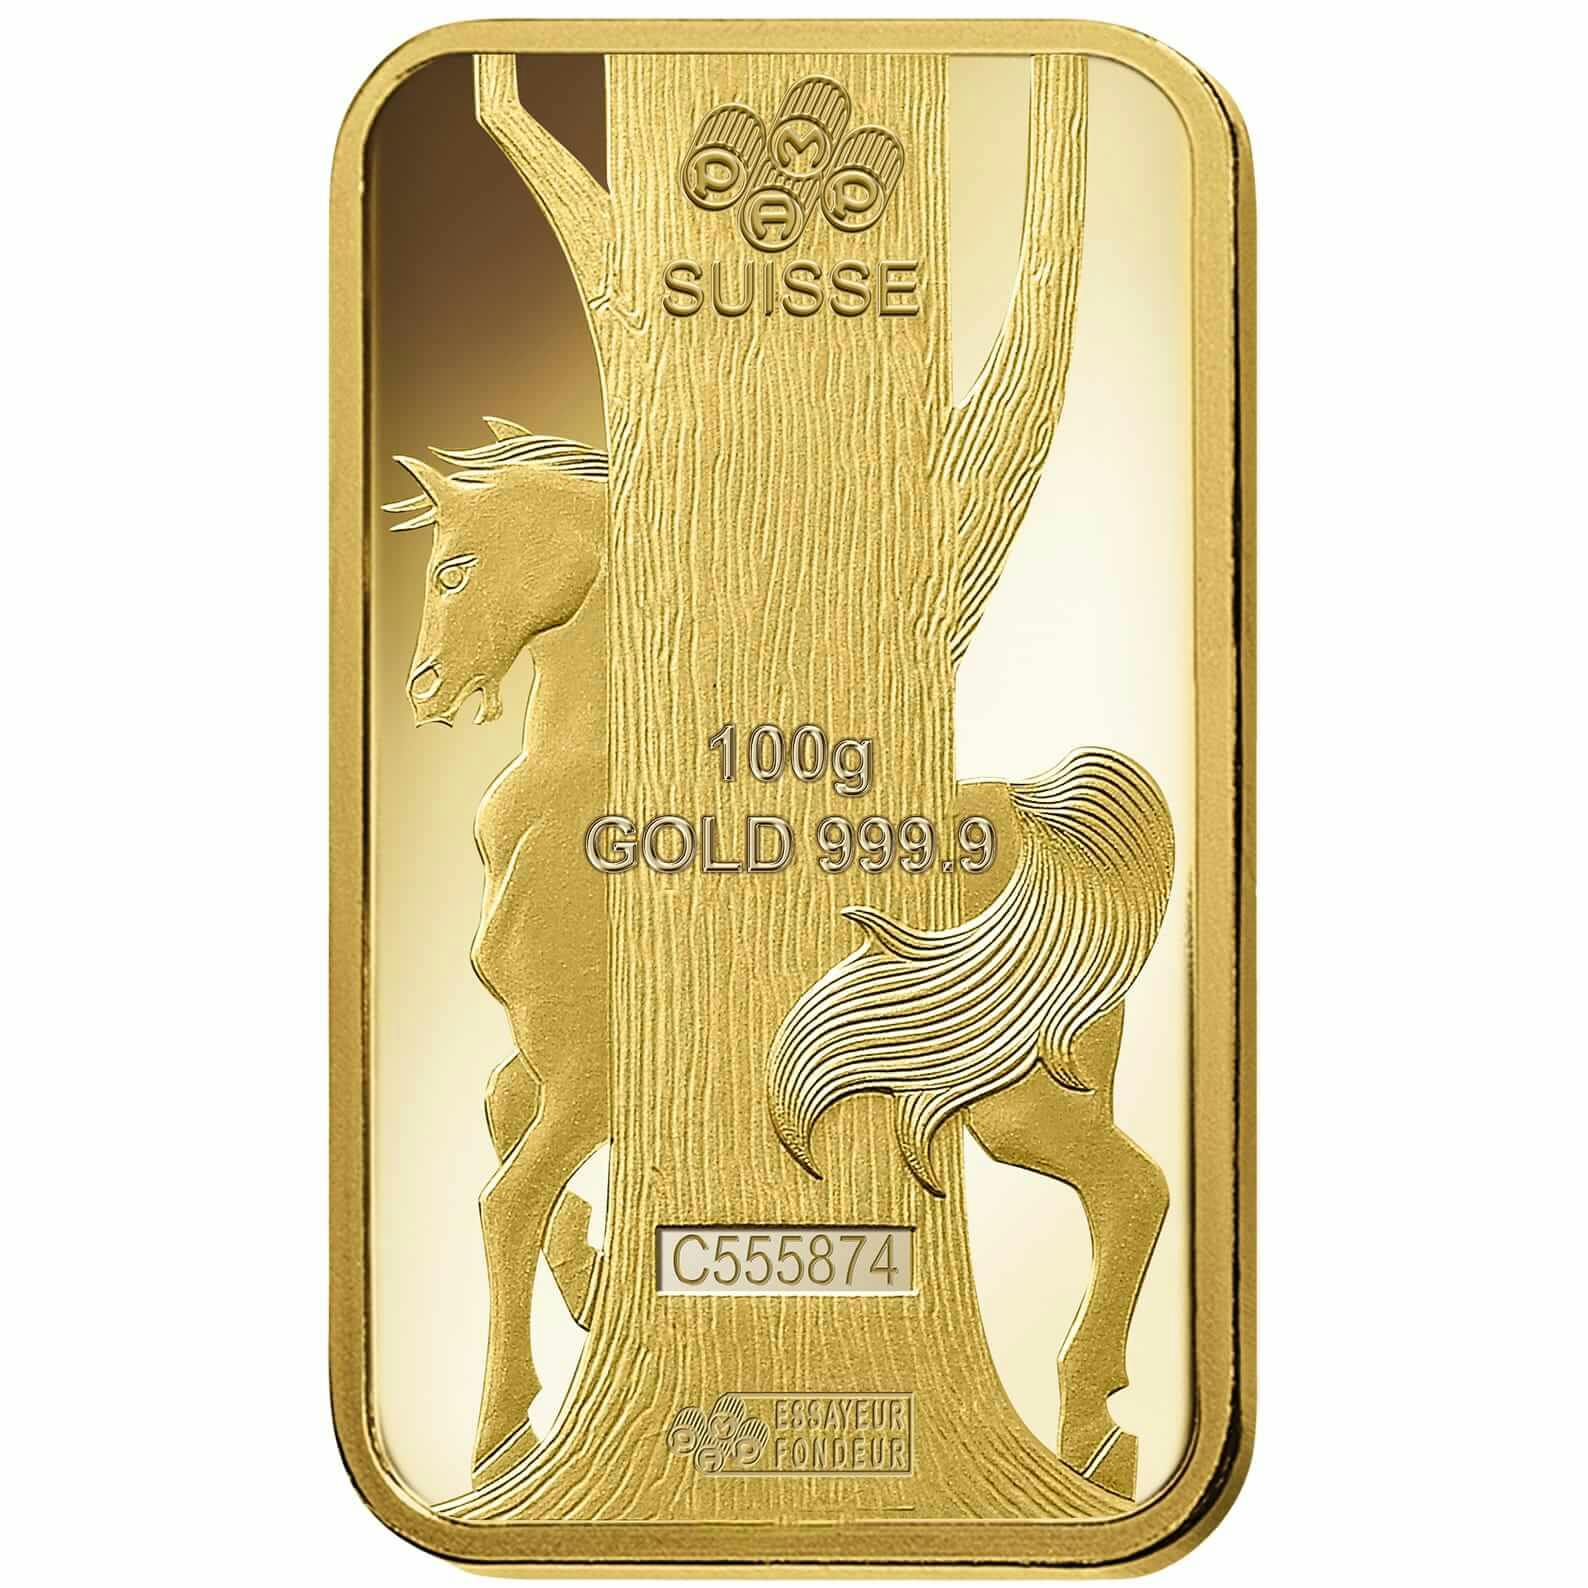 Invest in 100 gram Fine gold Lunar Horse - PAMP Swiss - Back